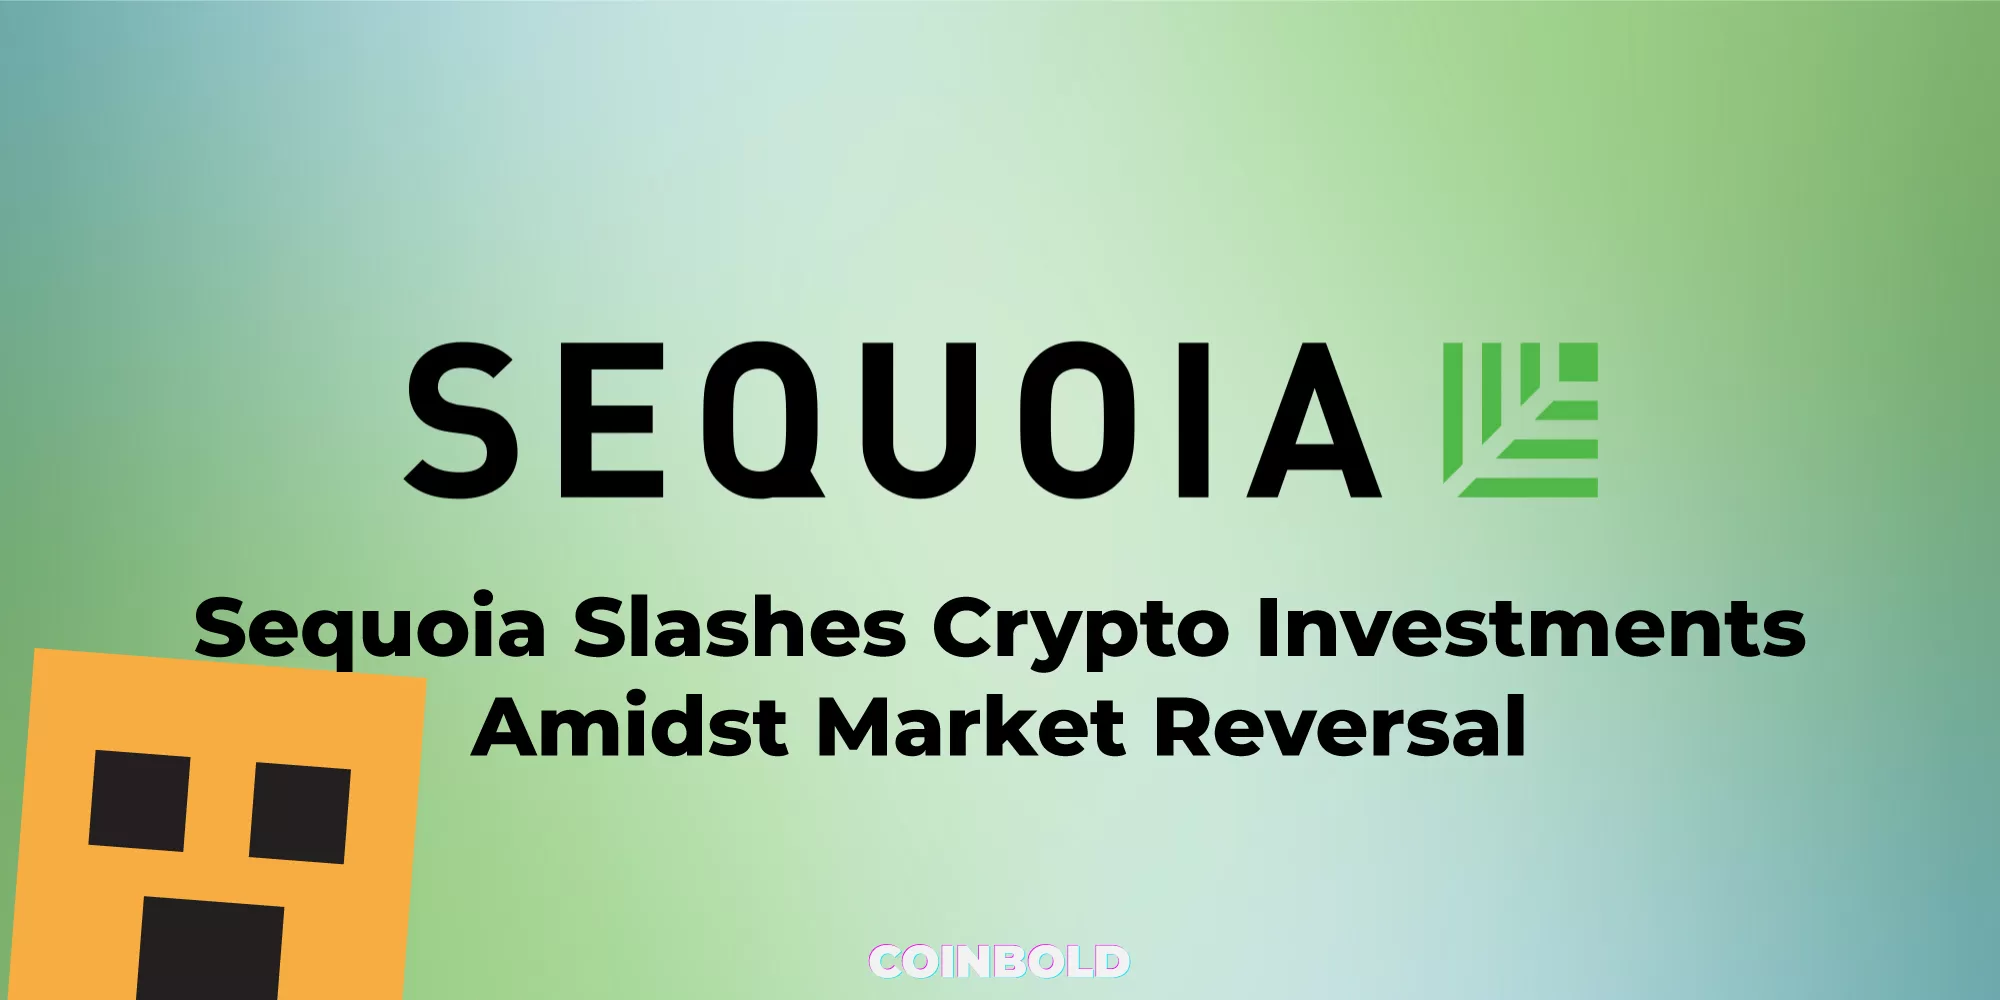 Sequoia Slashes Crypto Investments Amidst Market Reversal